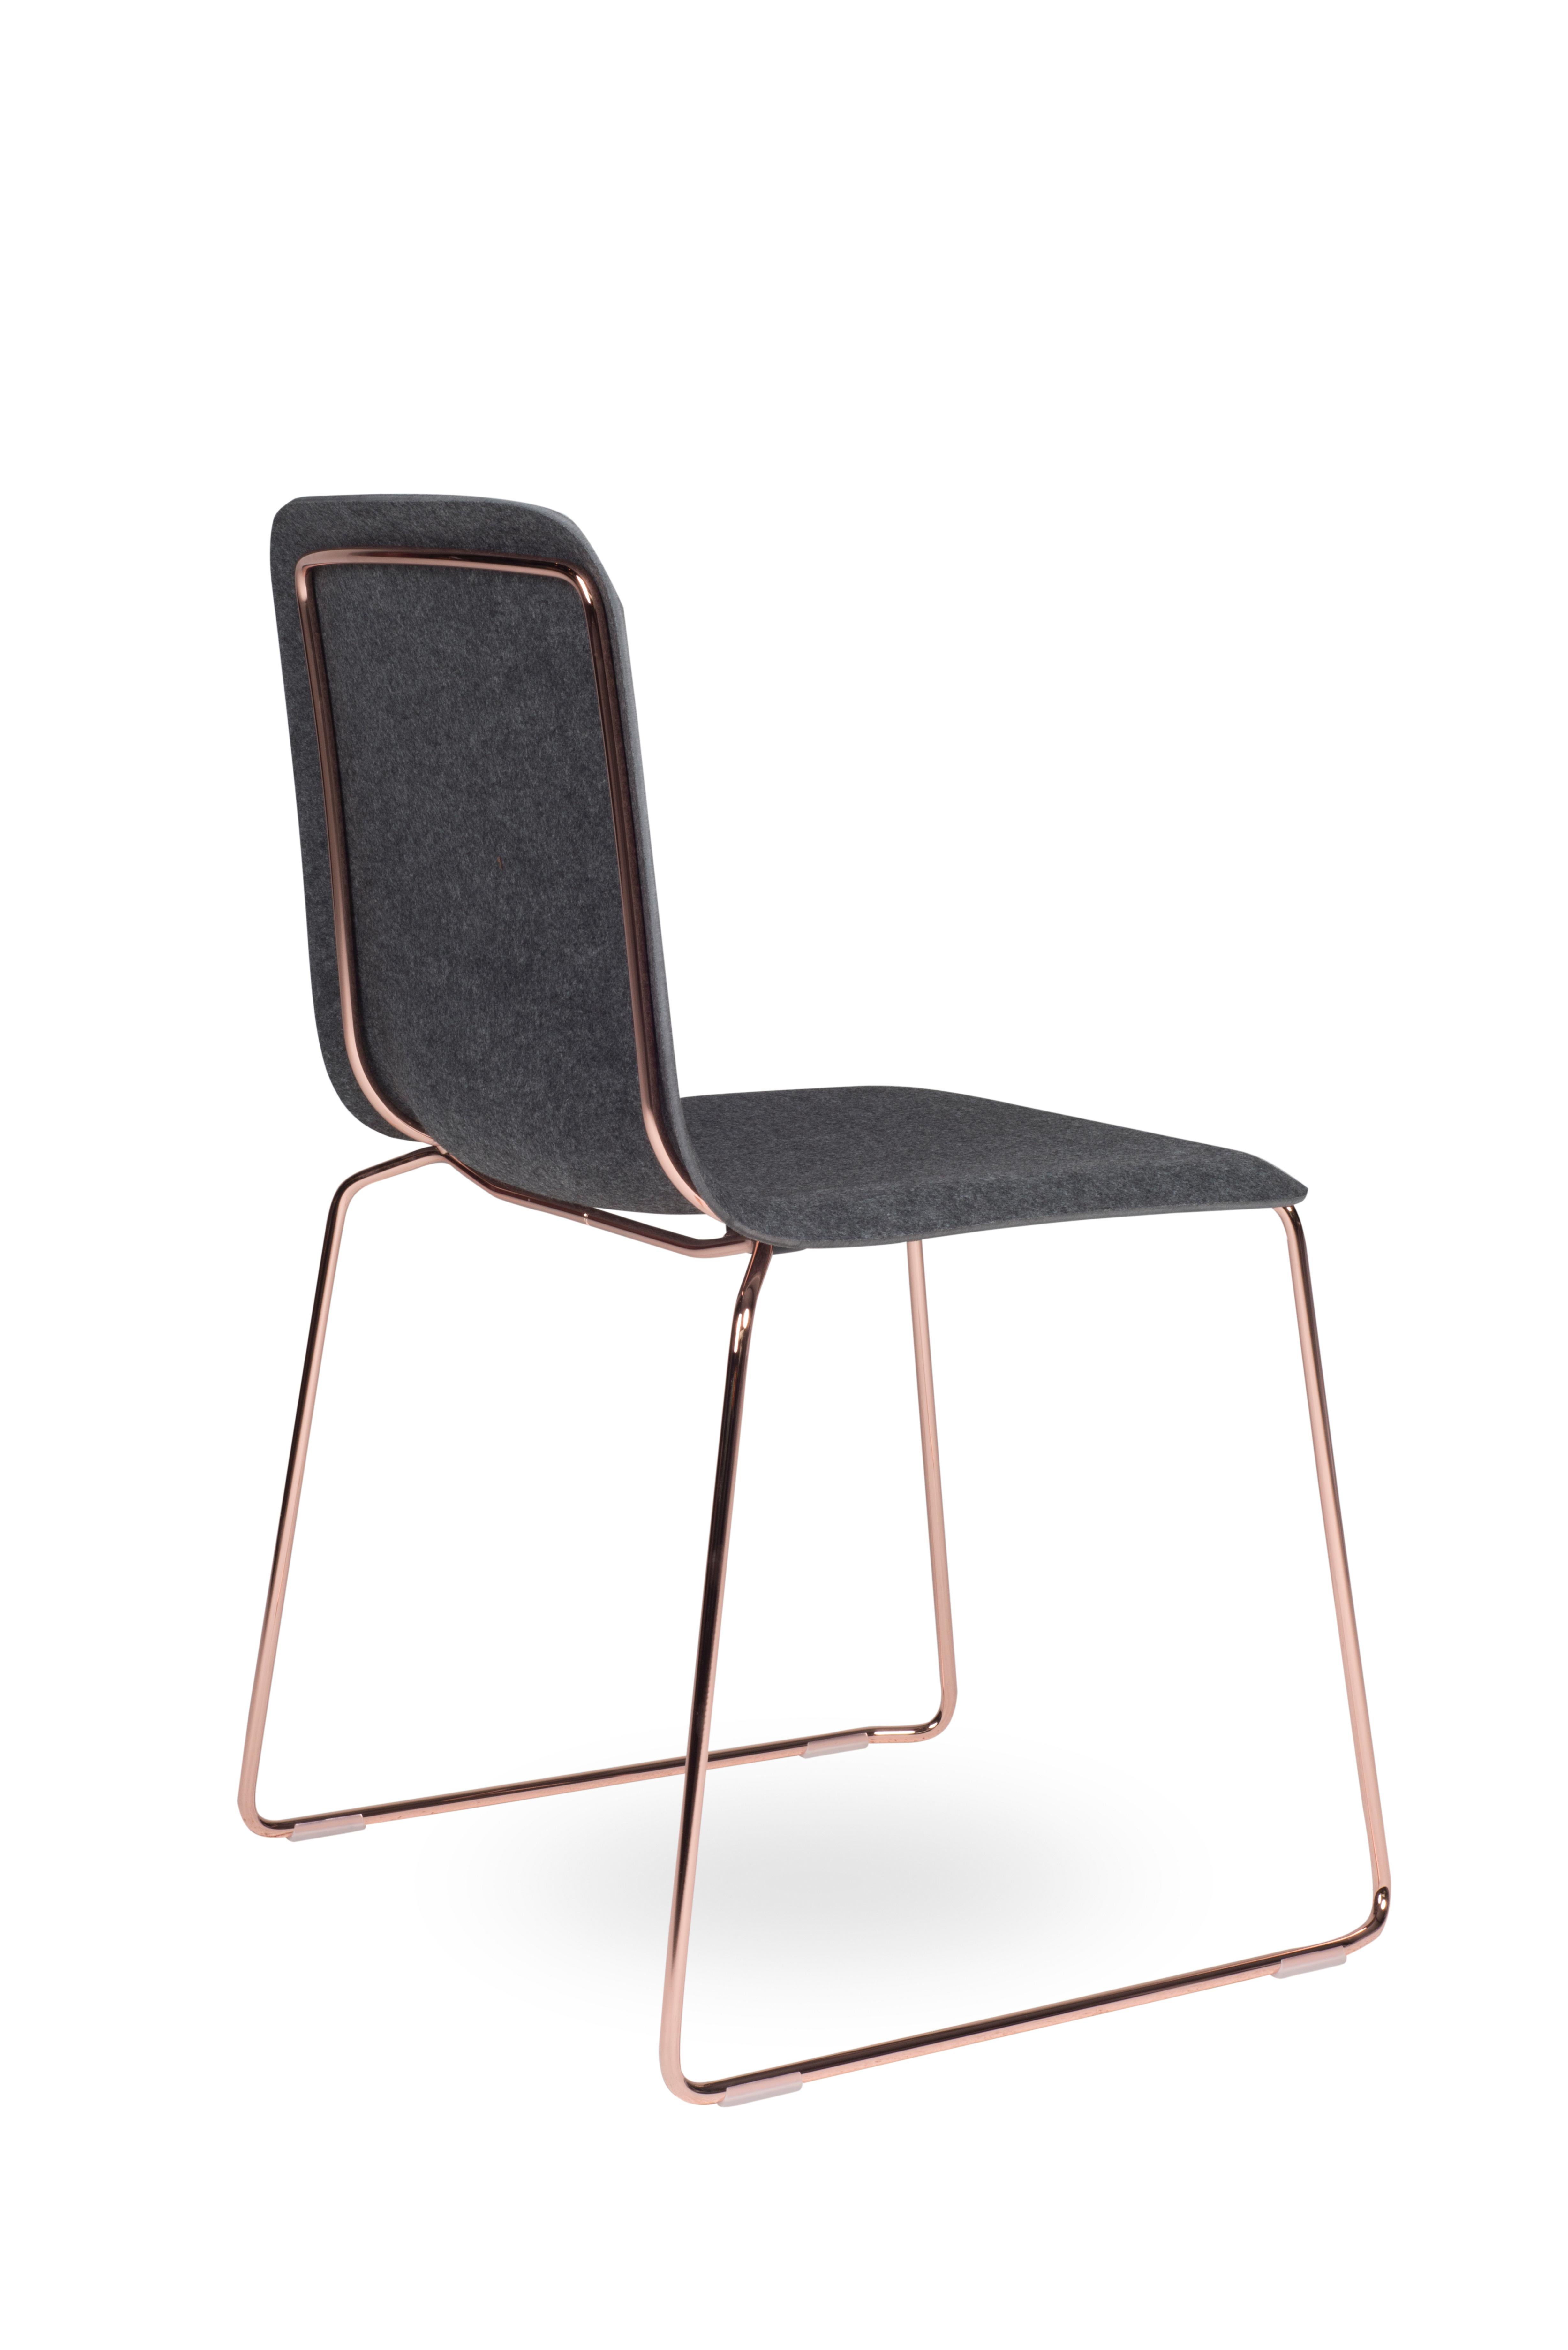 Dutch Lensvelt This 141 Felt Chair For Sale